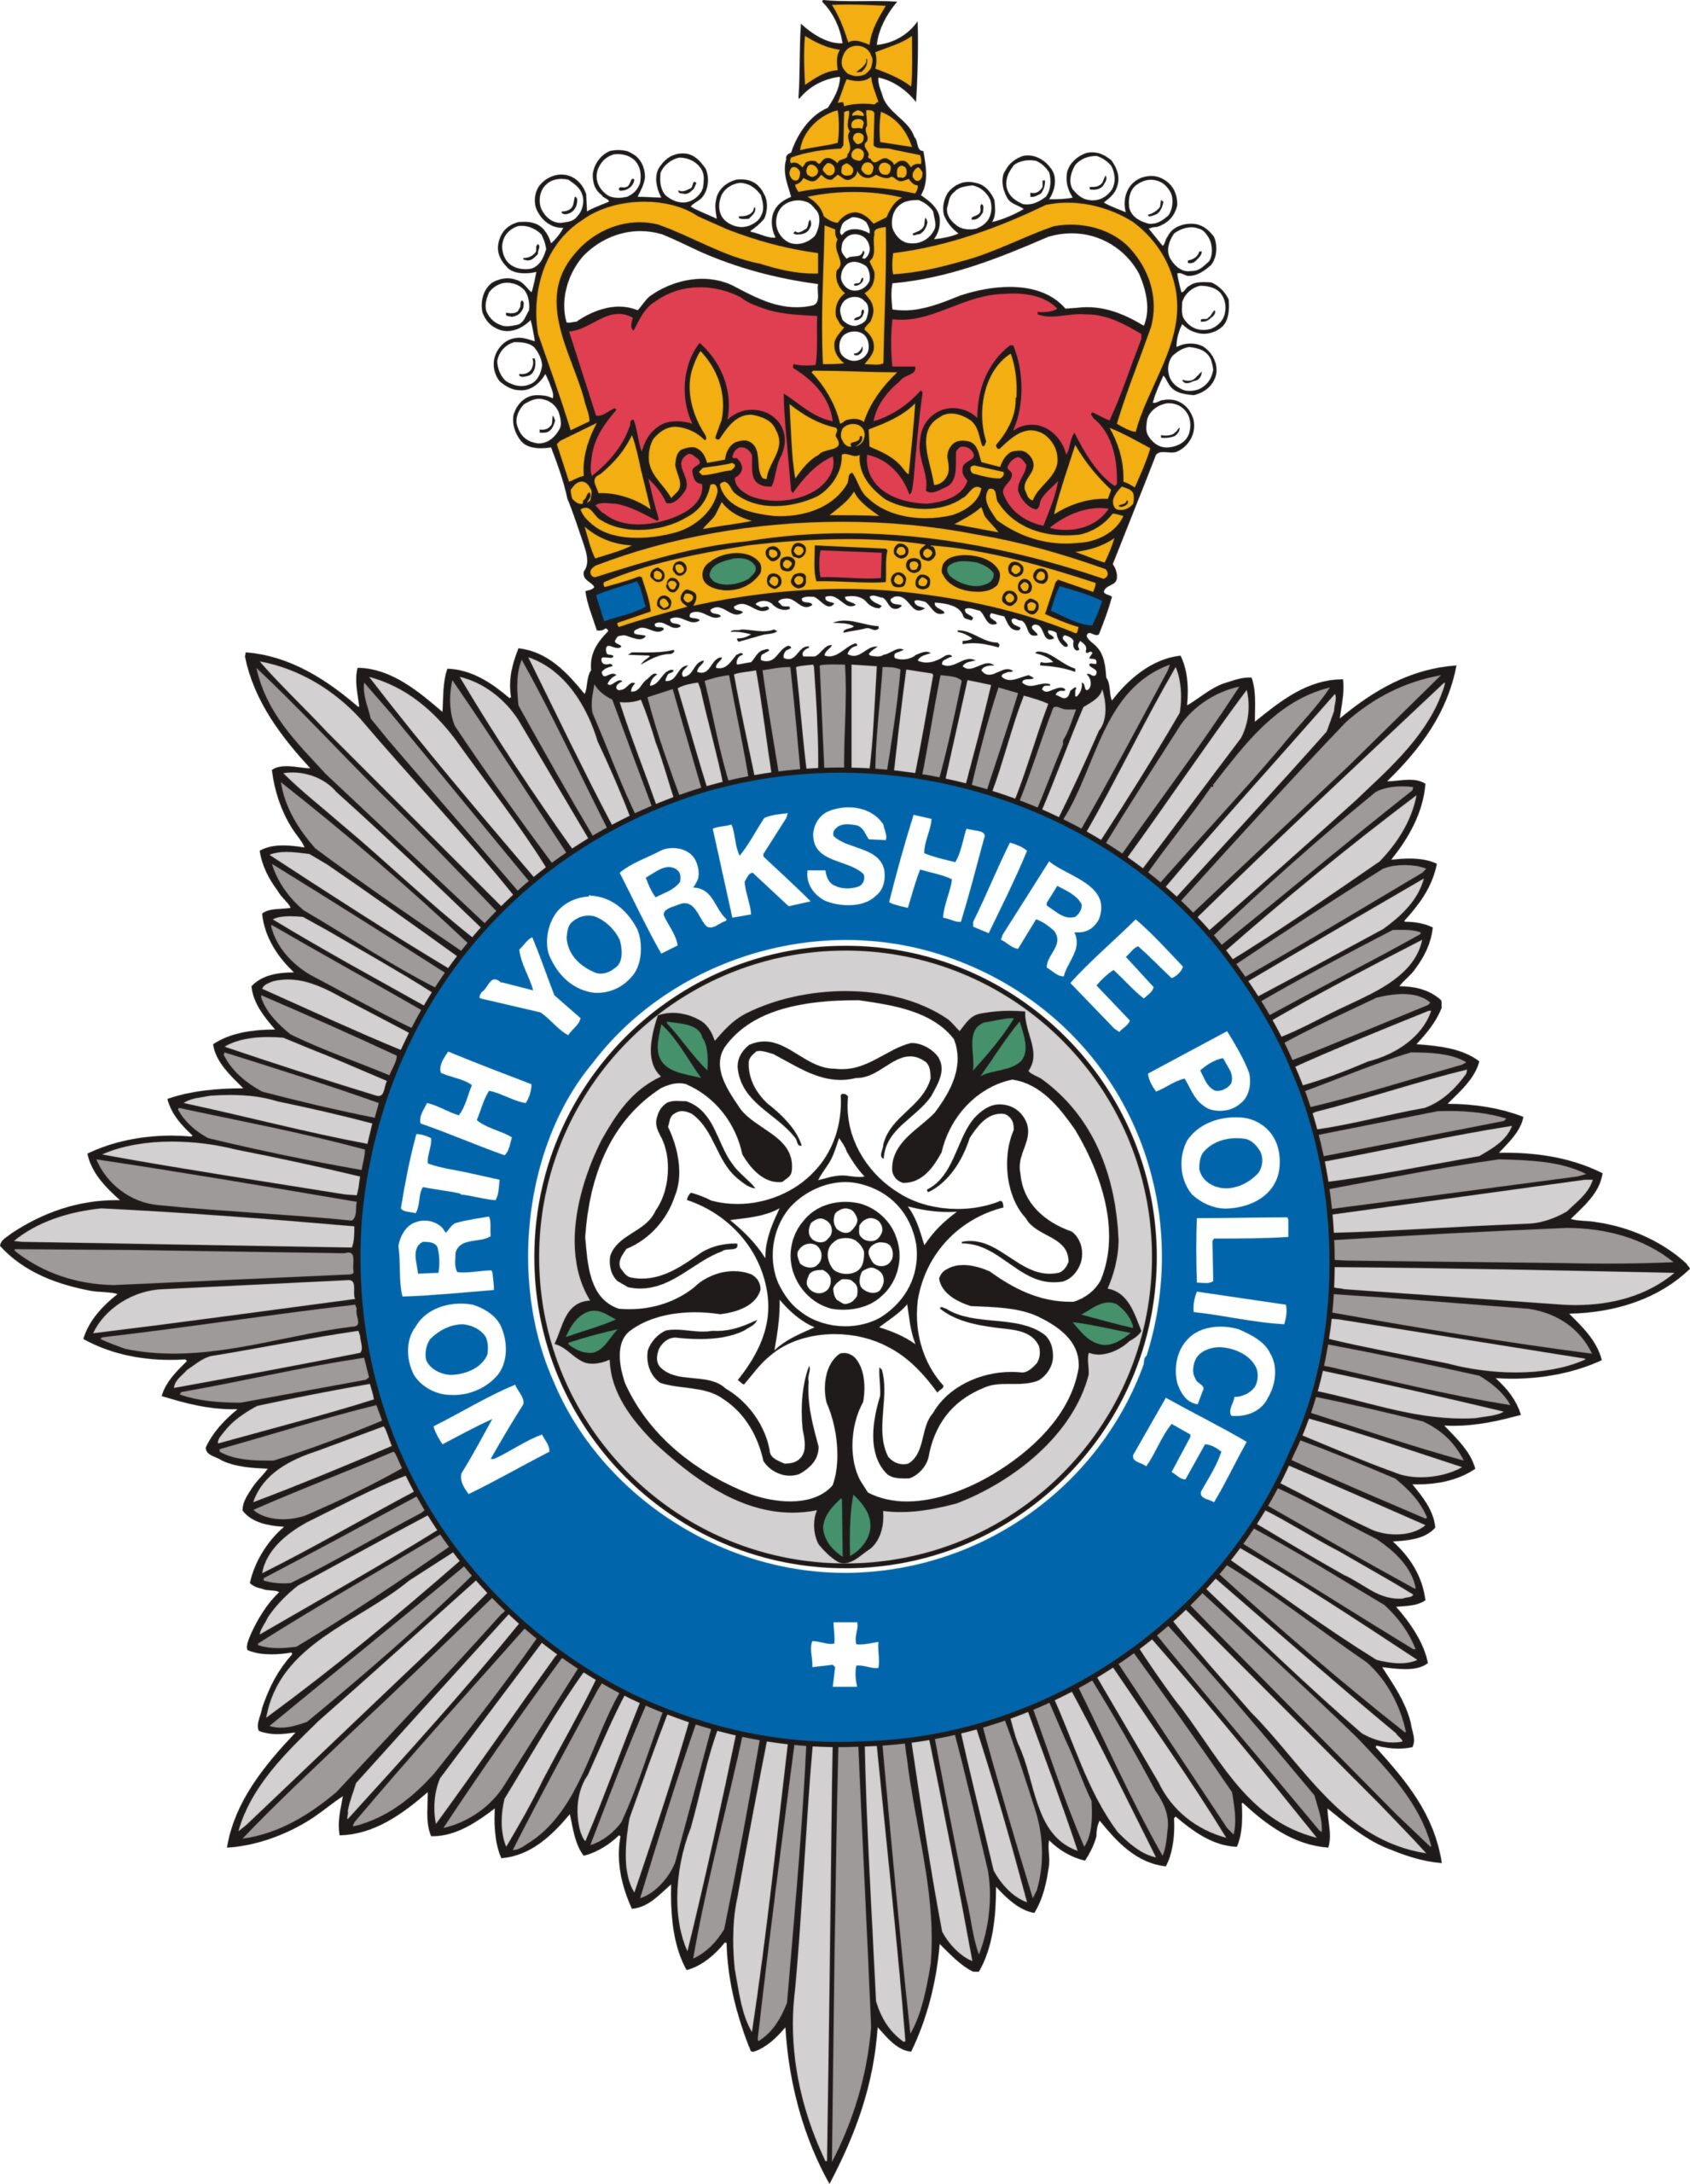 North-yorkshire-police-logo